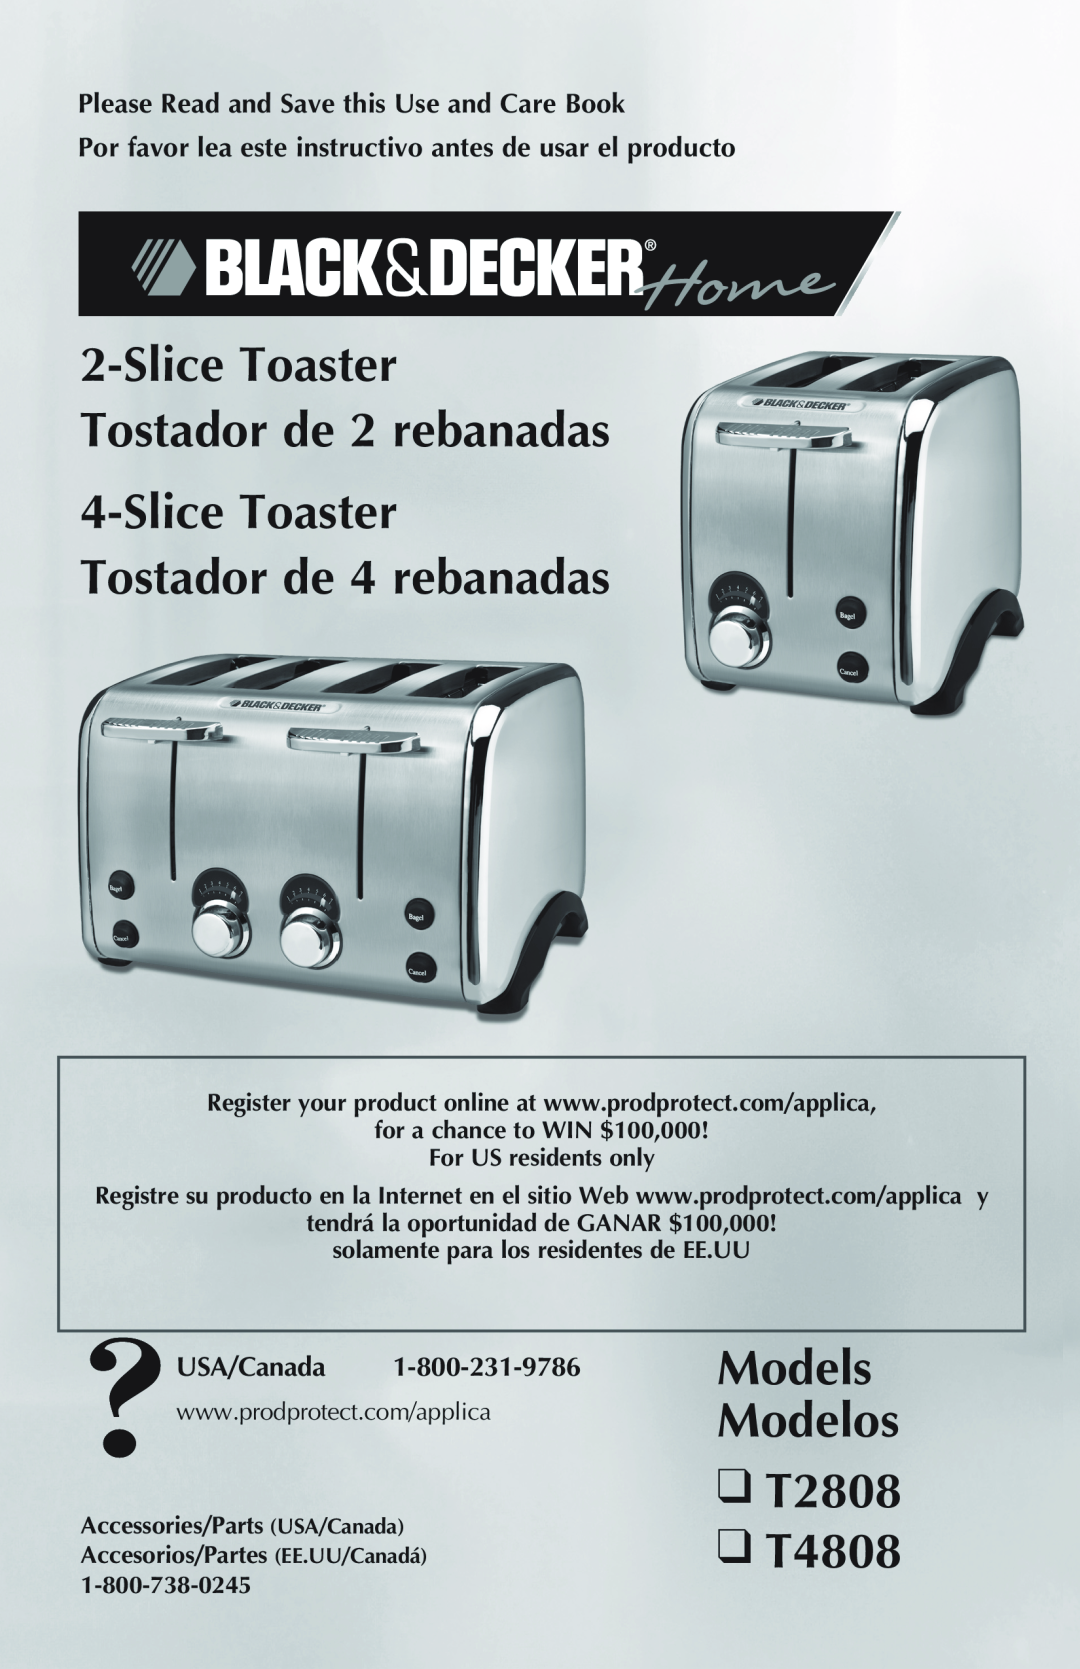 Black & Decker manual T2808 T4808, Models Modelos, Slice Toaster Tostador de 2 rebanadas, USA/Canada 